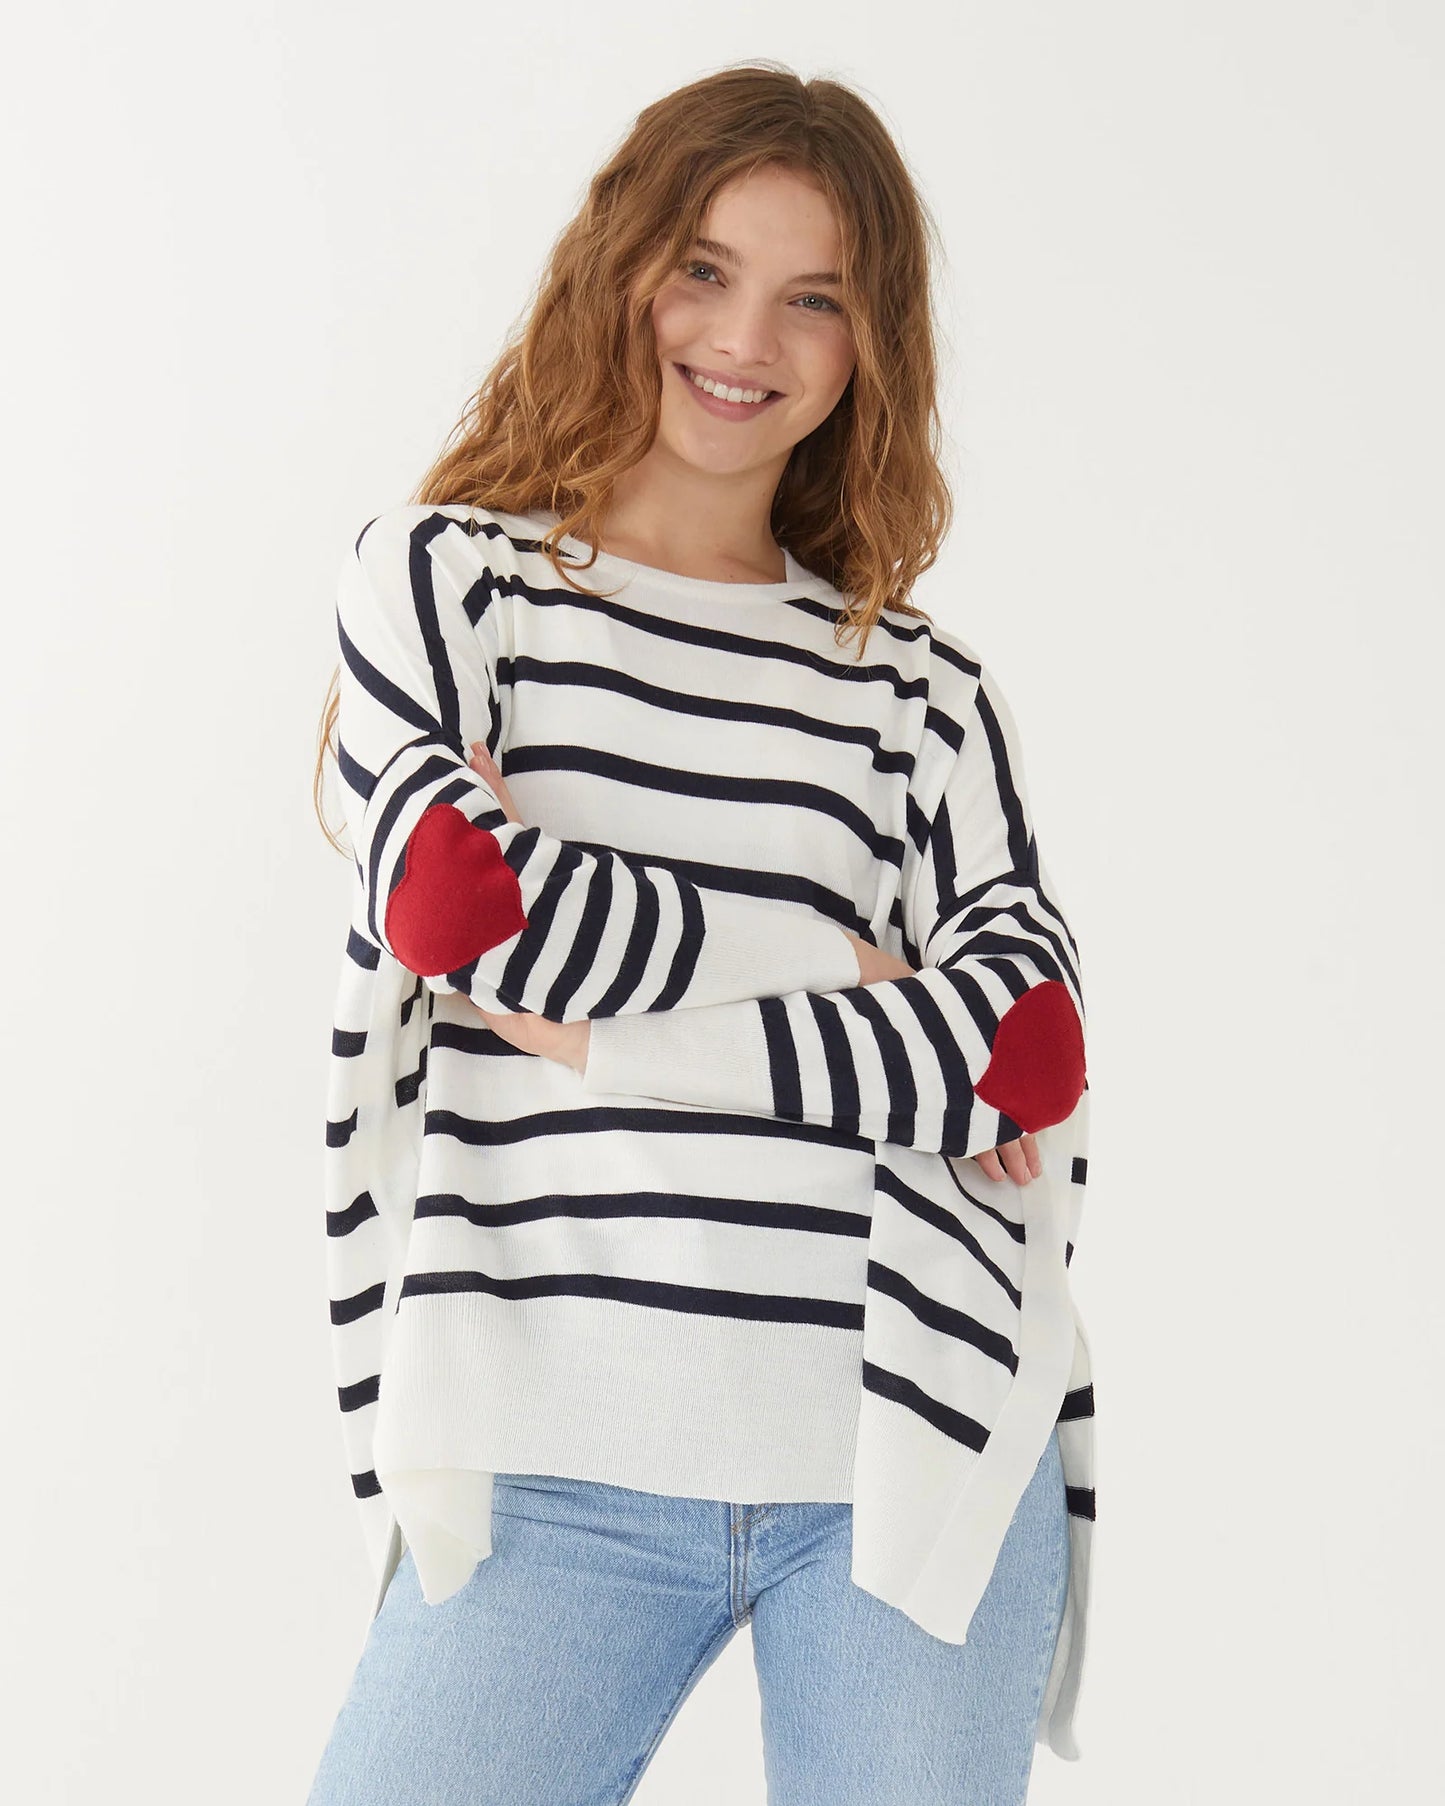 MerSea - Amour Sweater